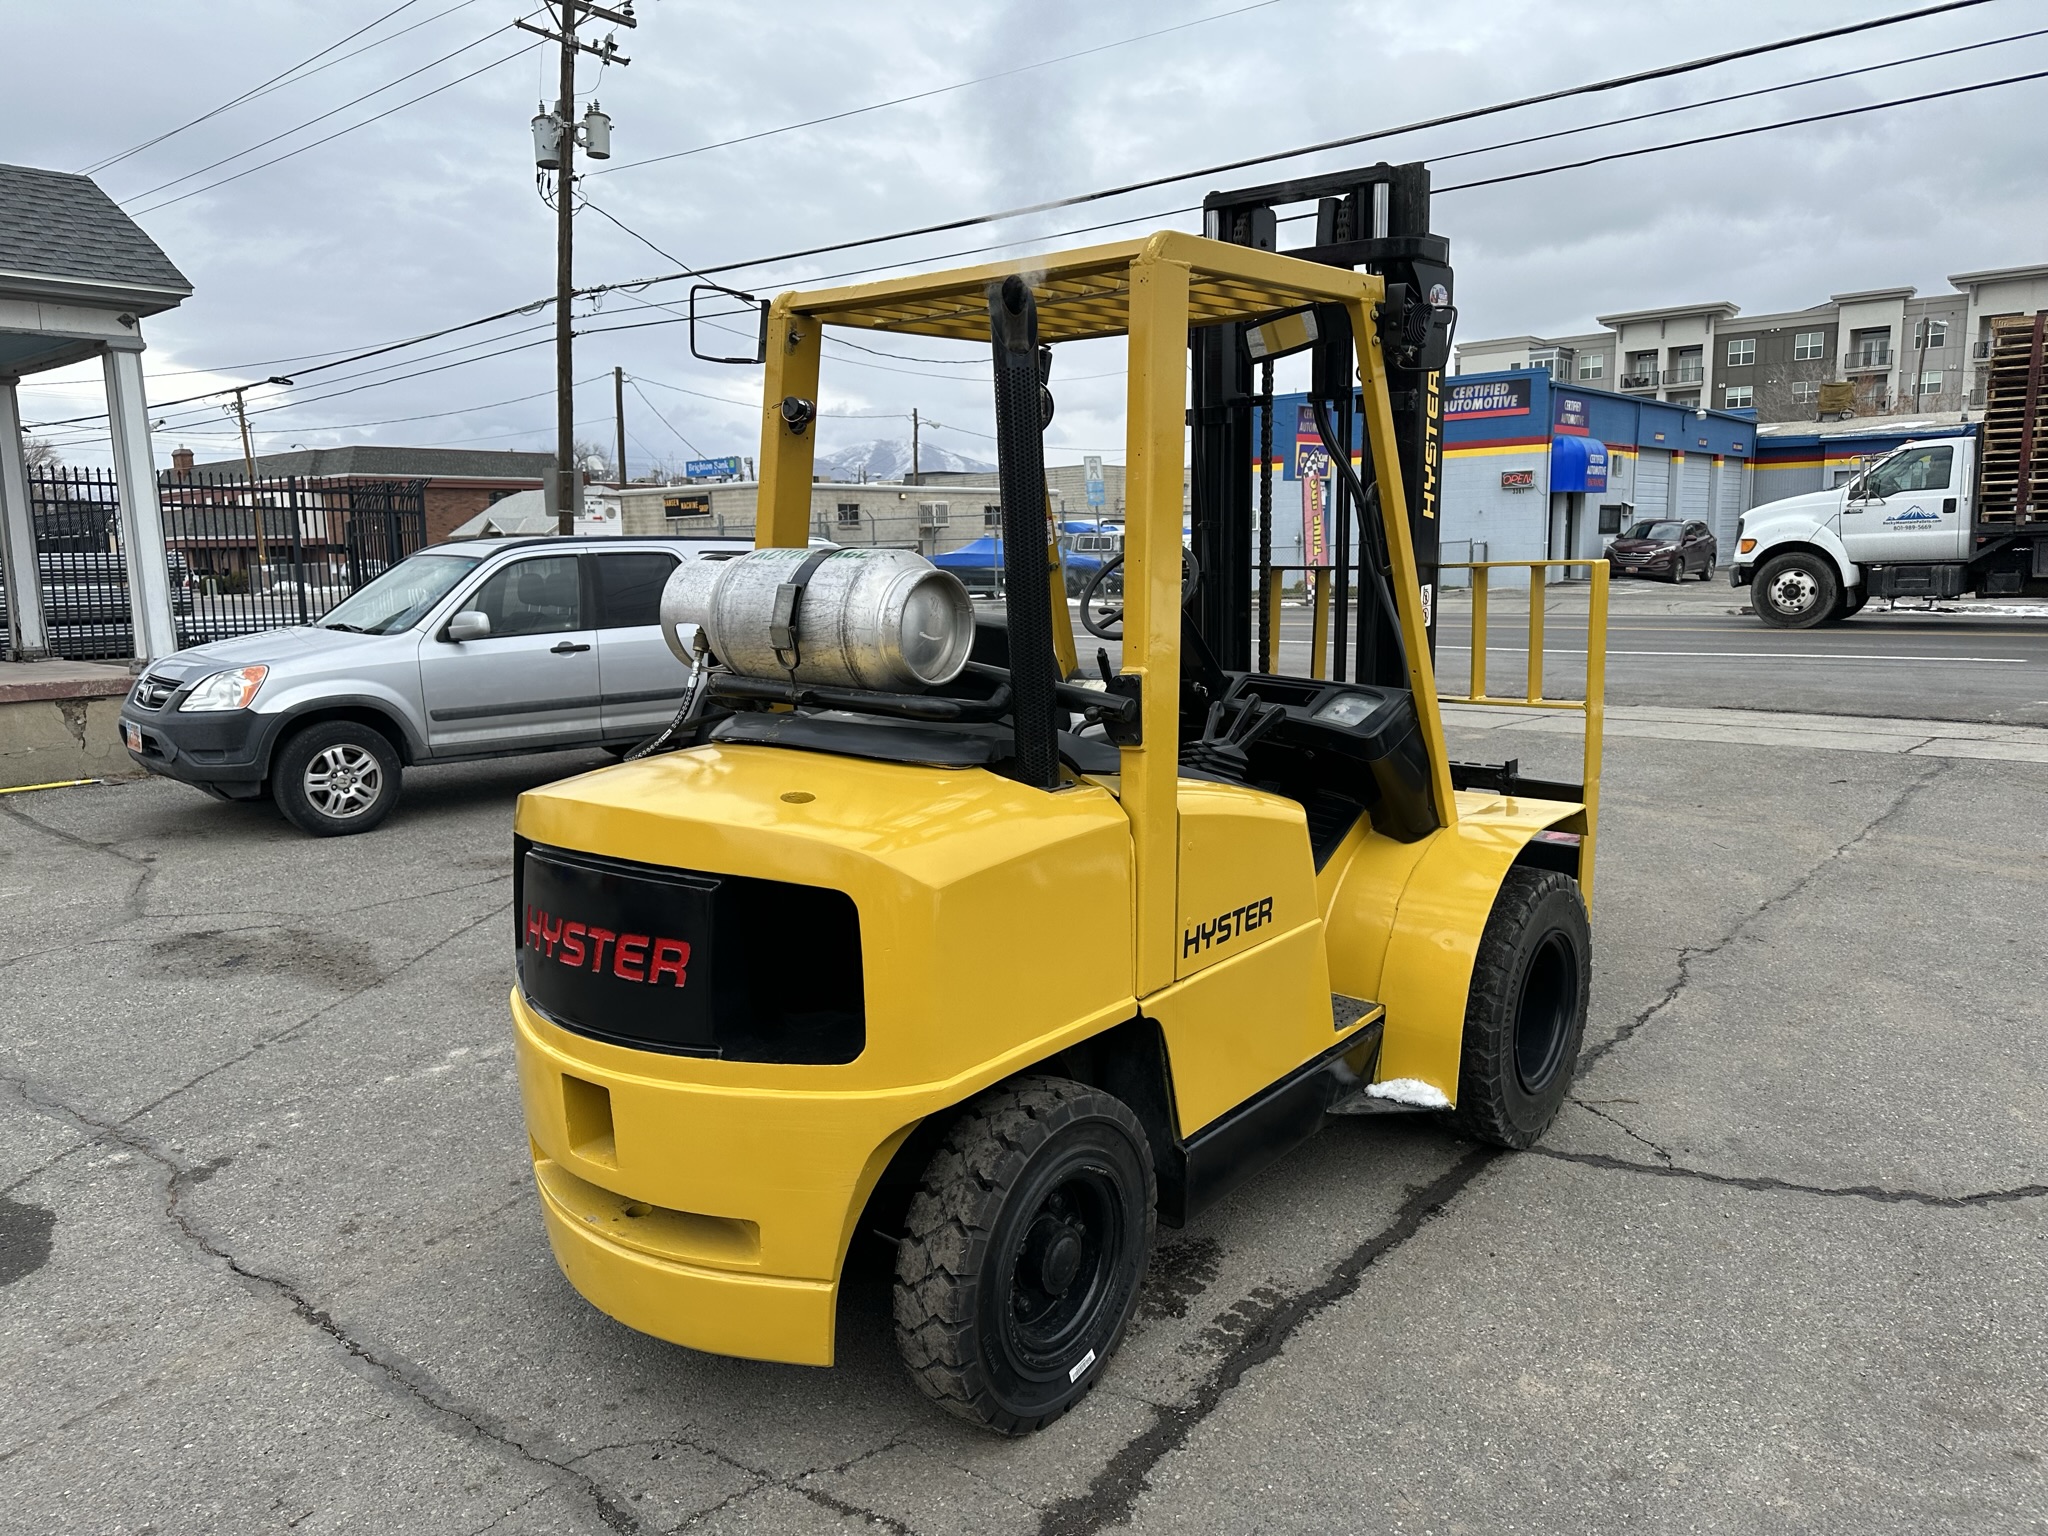 H90xms 9000 Pound Forklift Dogface Heavy Equipment Sales Dogface